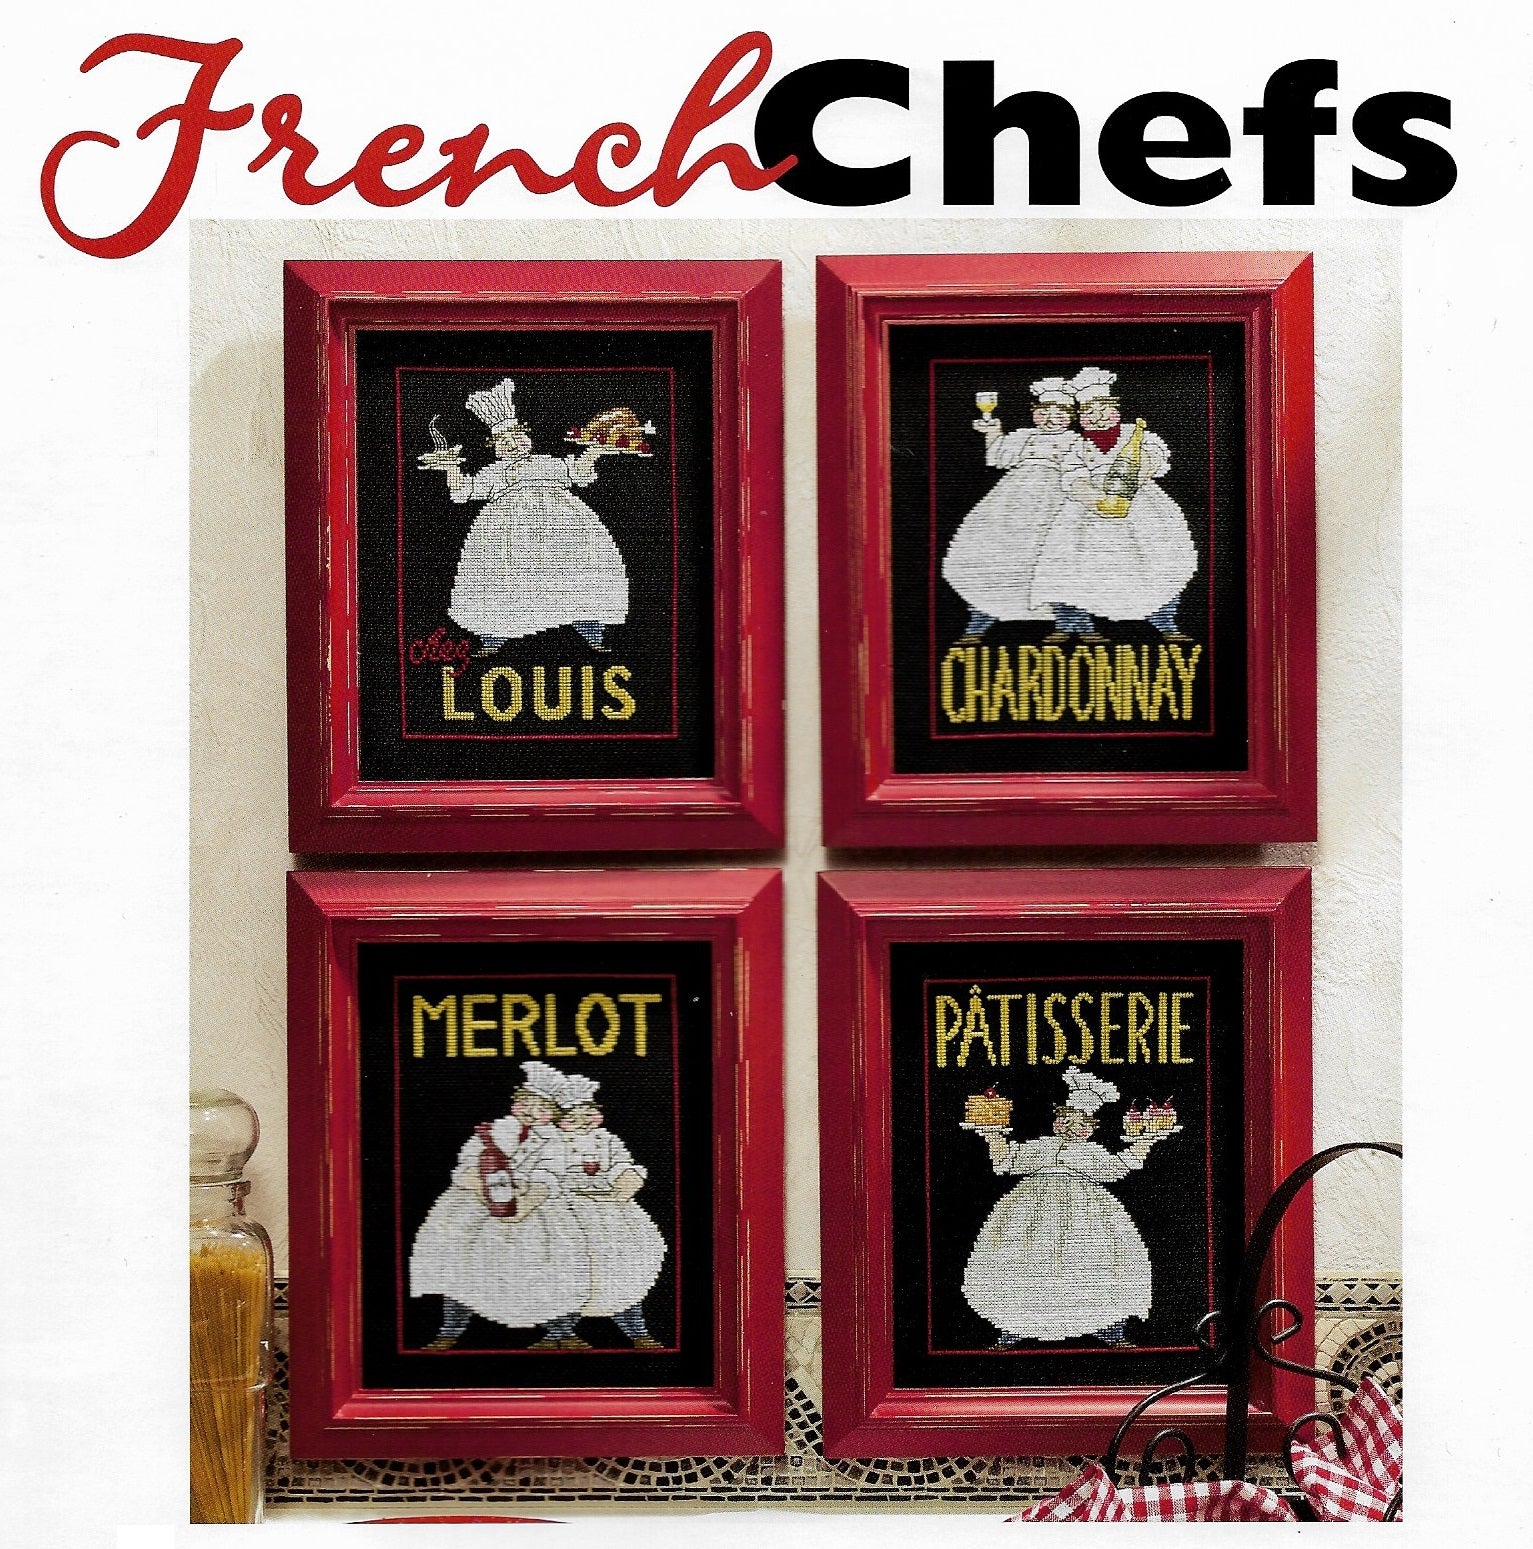 Leisure Arts French Chefs 3966 cross stitch pattern